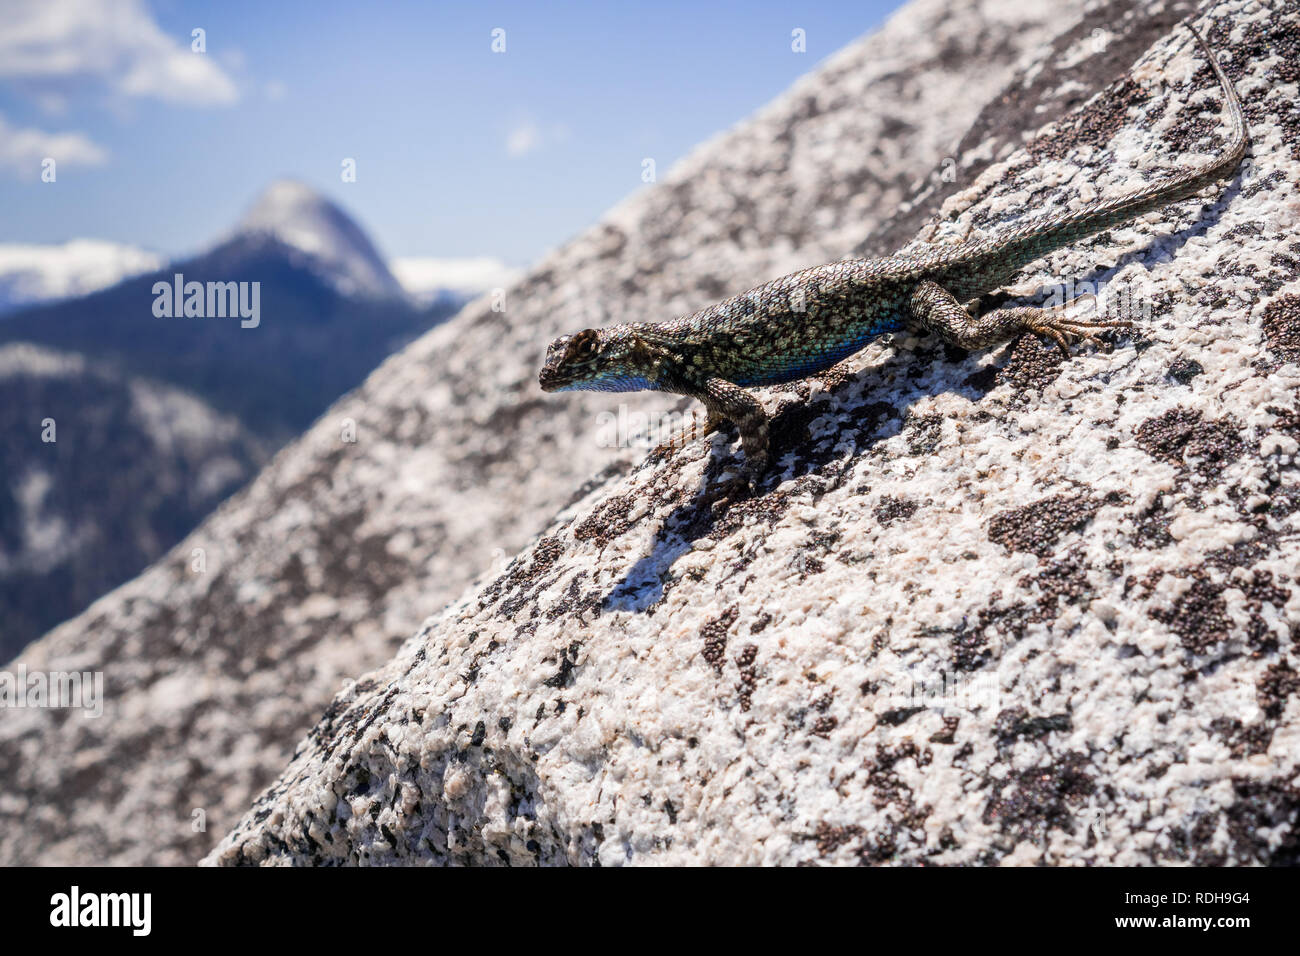 Blue bellied lizard (Sceloporus occidentalis) resting on a granite rock, Yosemite National Park, California Stock Photo